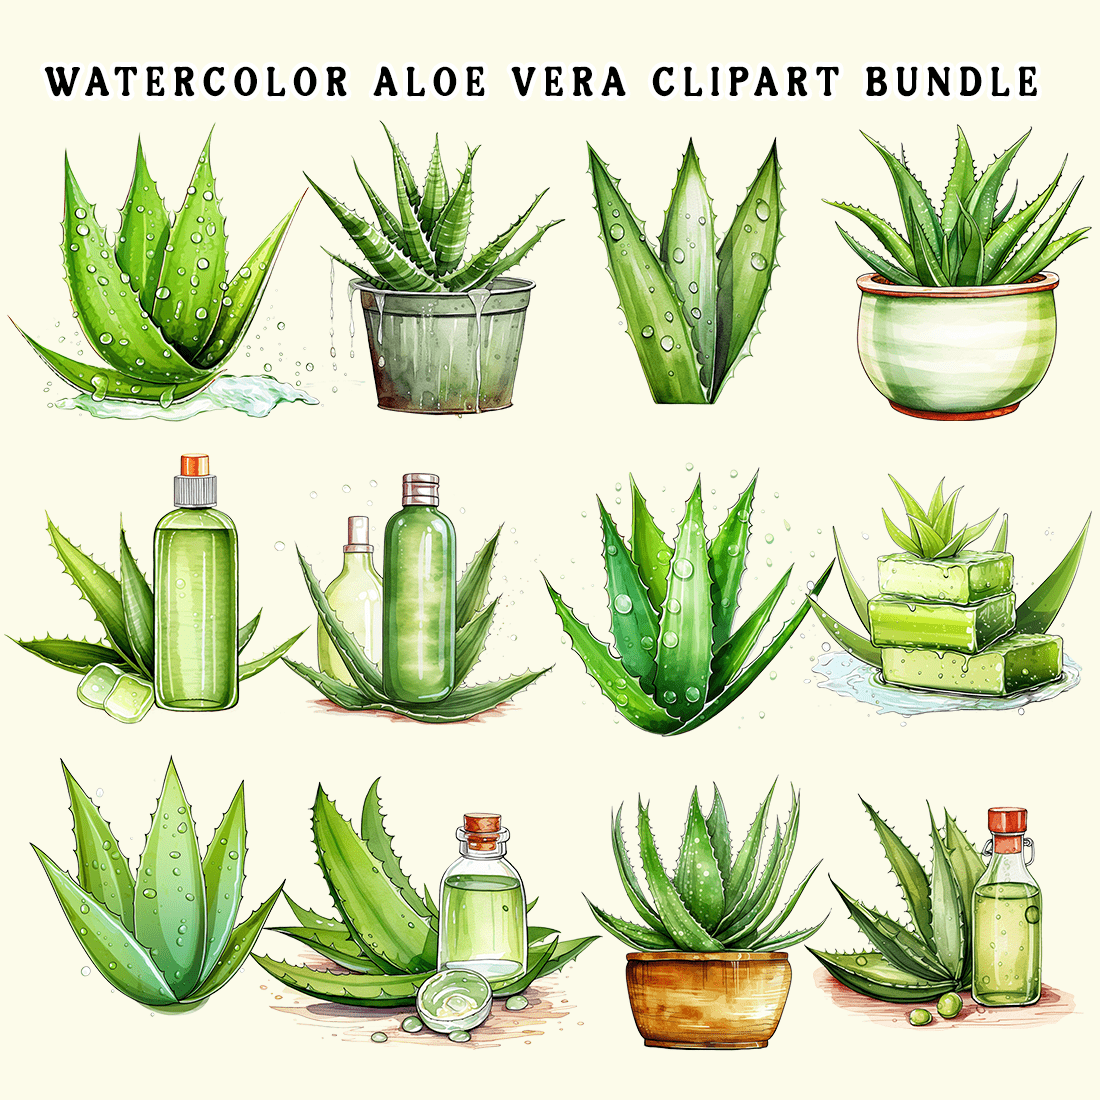 Watercolor Aloe Vera Clipart Bundle preview image.